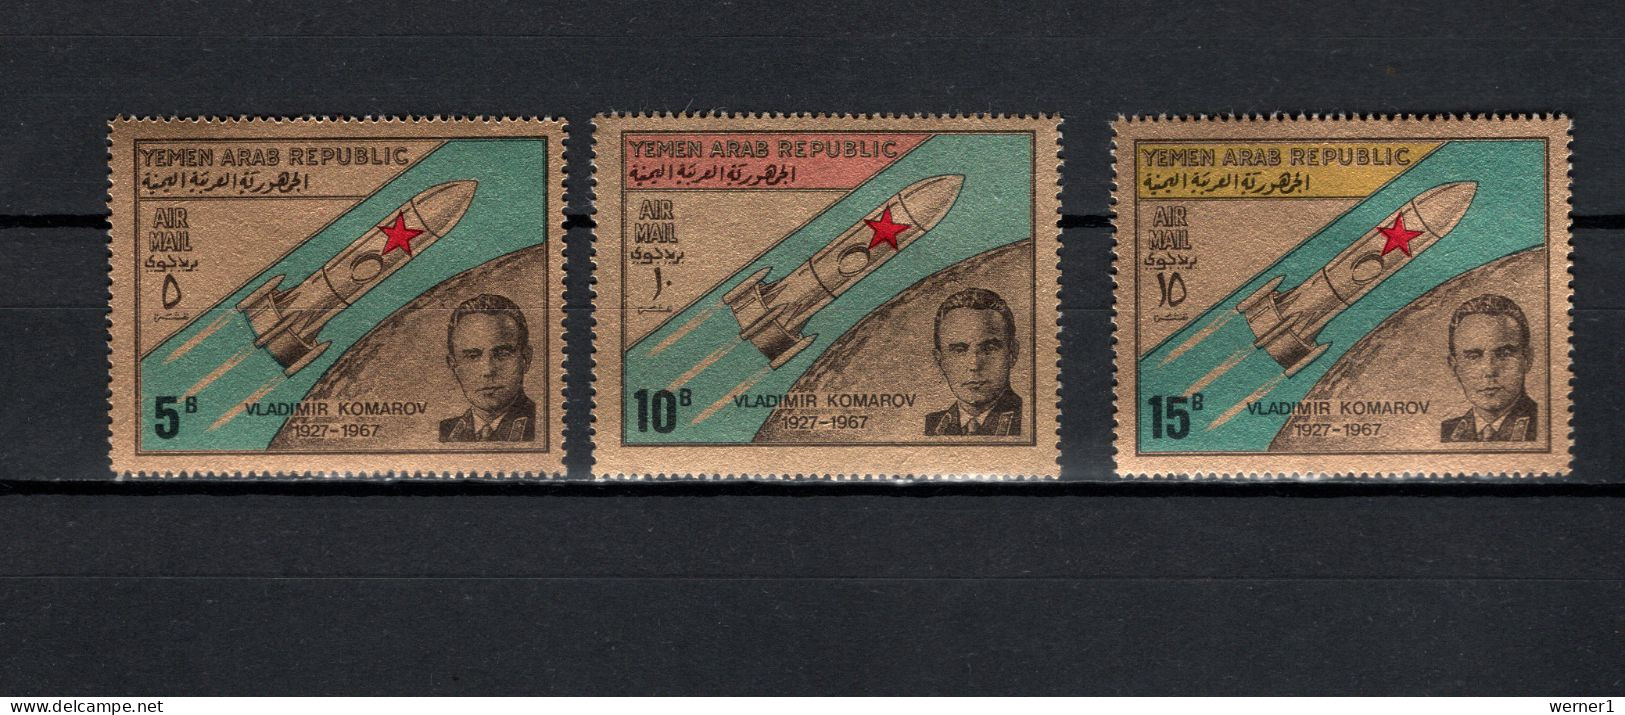 Yemen Arab Republic 1968 Space, Vladimir Komarov Set Of 3 Golden Colour MNH - Asia